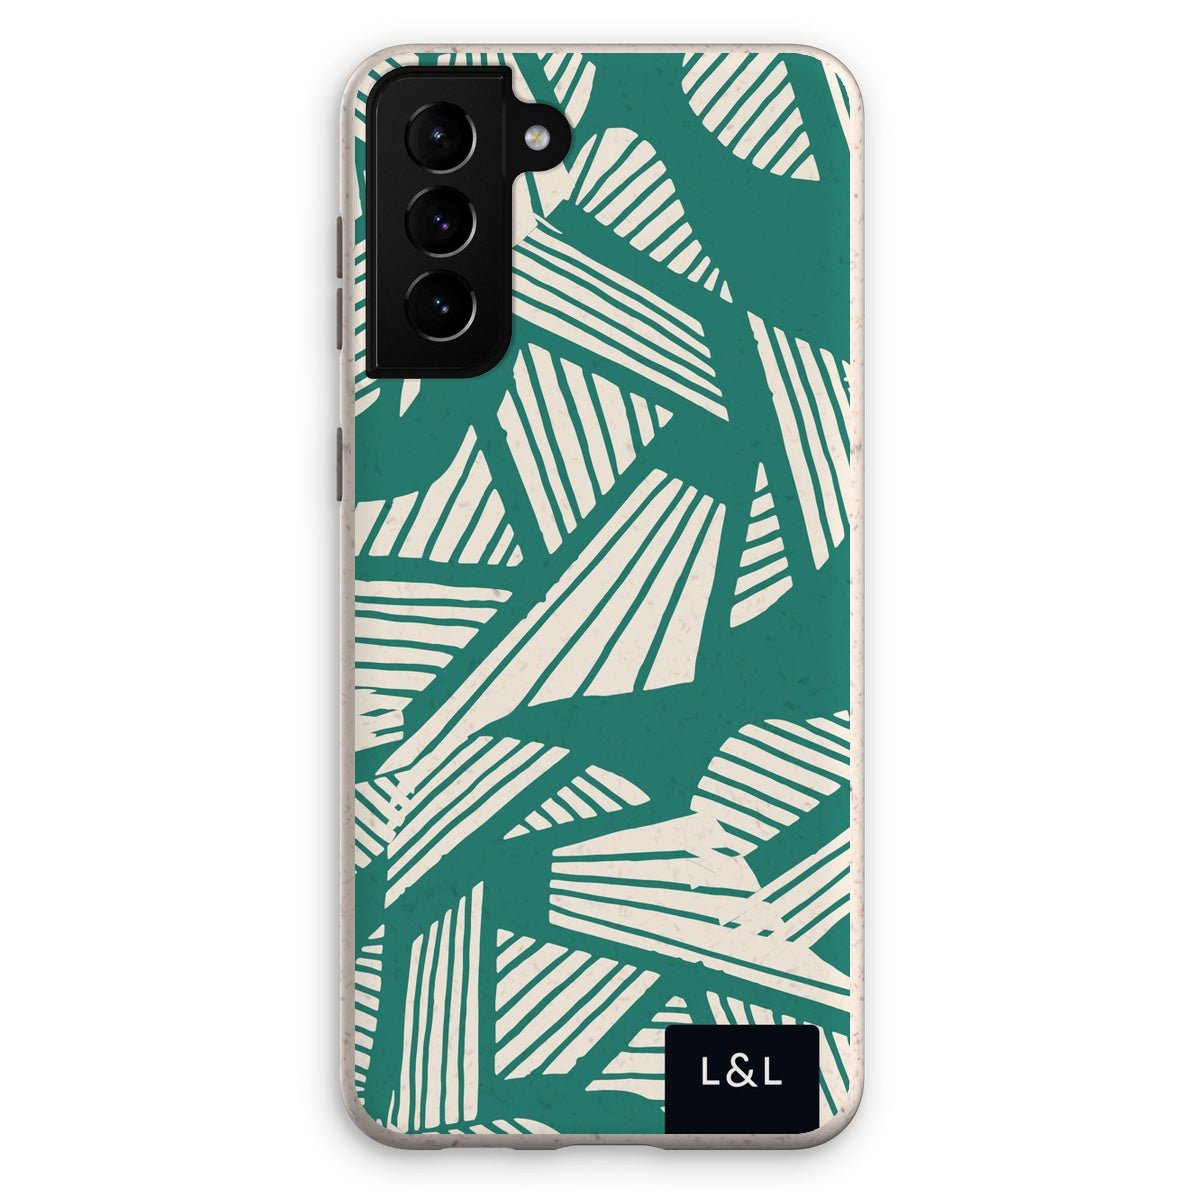 Desert island Eco Phone Case - Loam & Lore